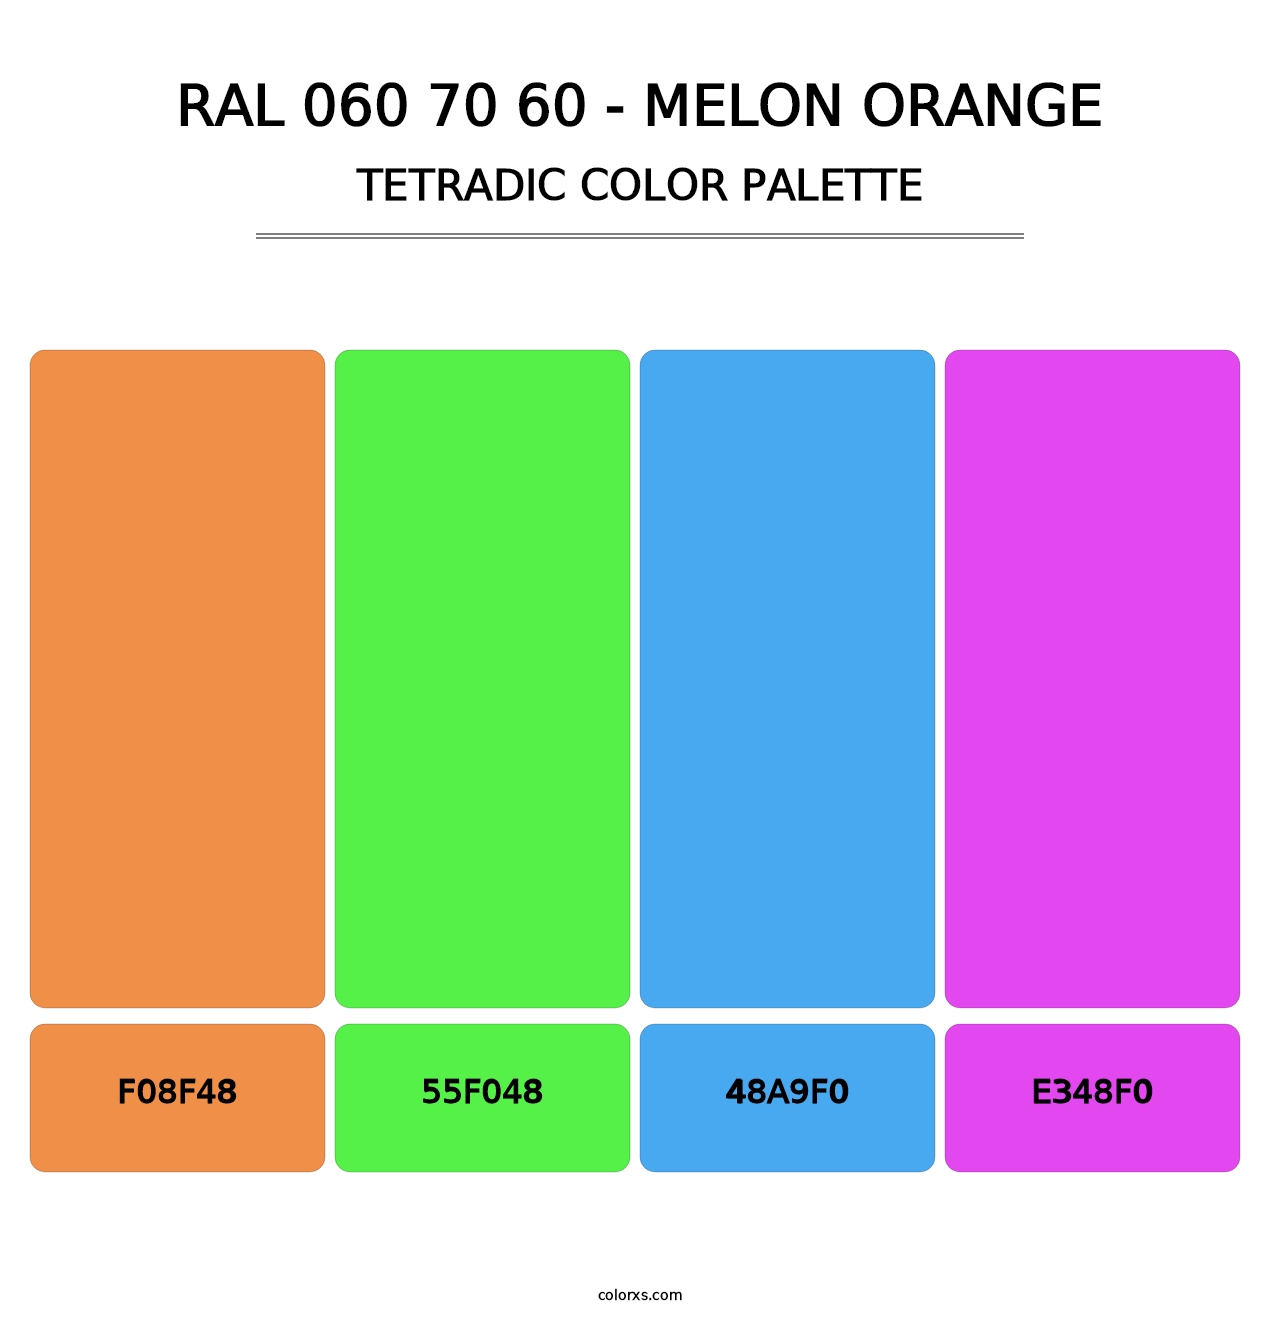 RAL 060 70 60 - Melon Orange - Tetradic Color Palette